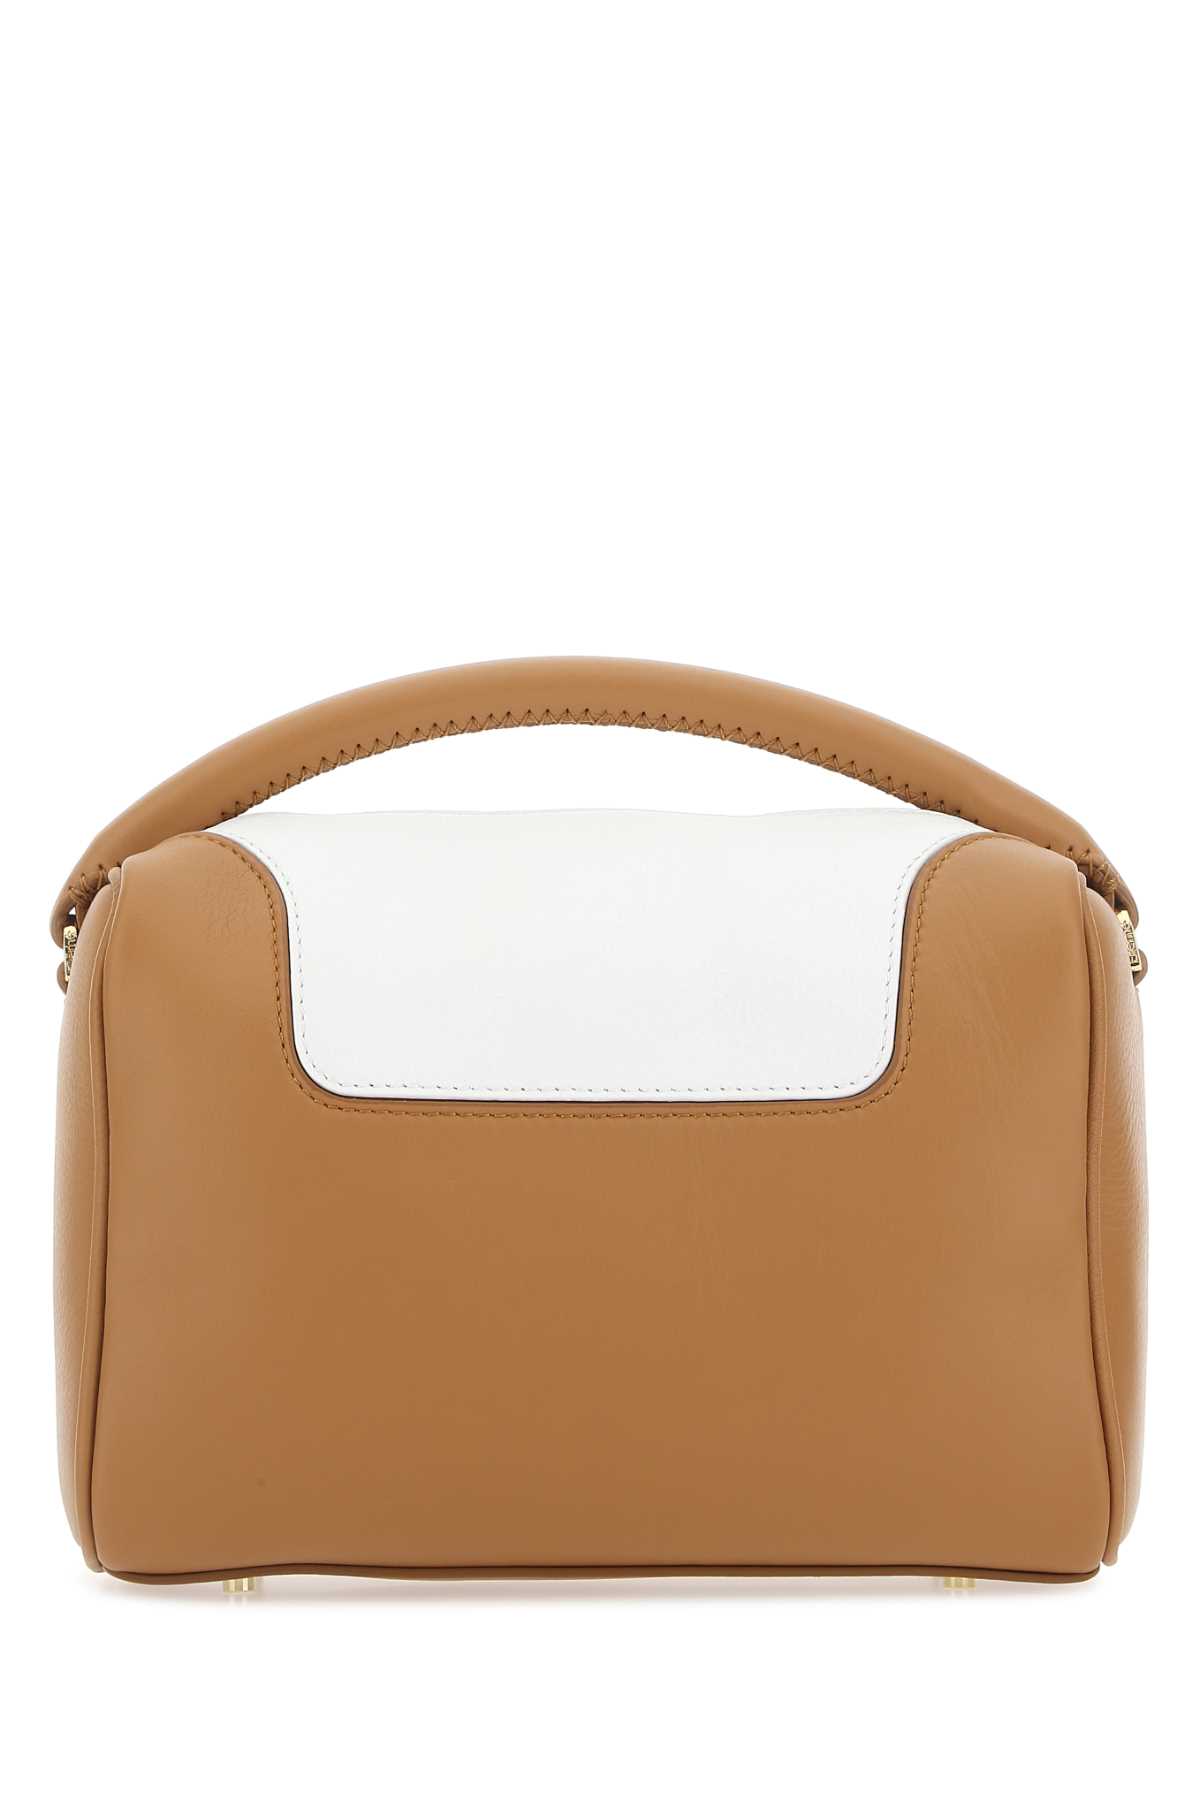 Two-tone Leather Treasure Handbag